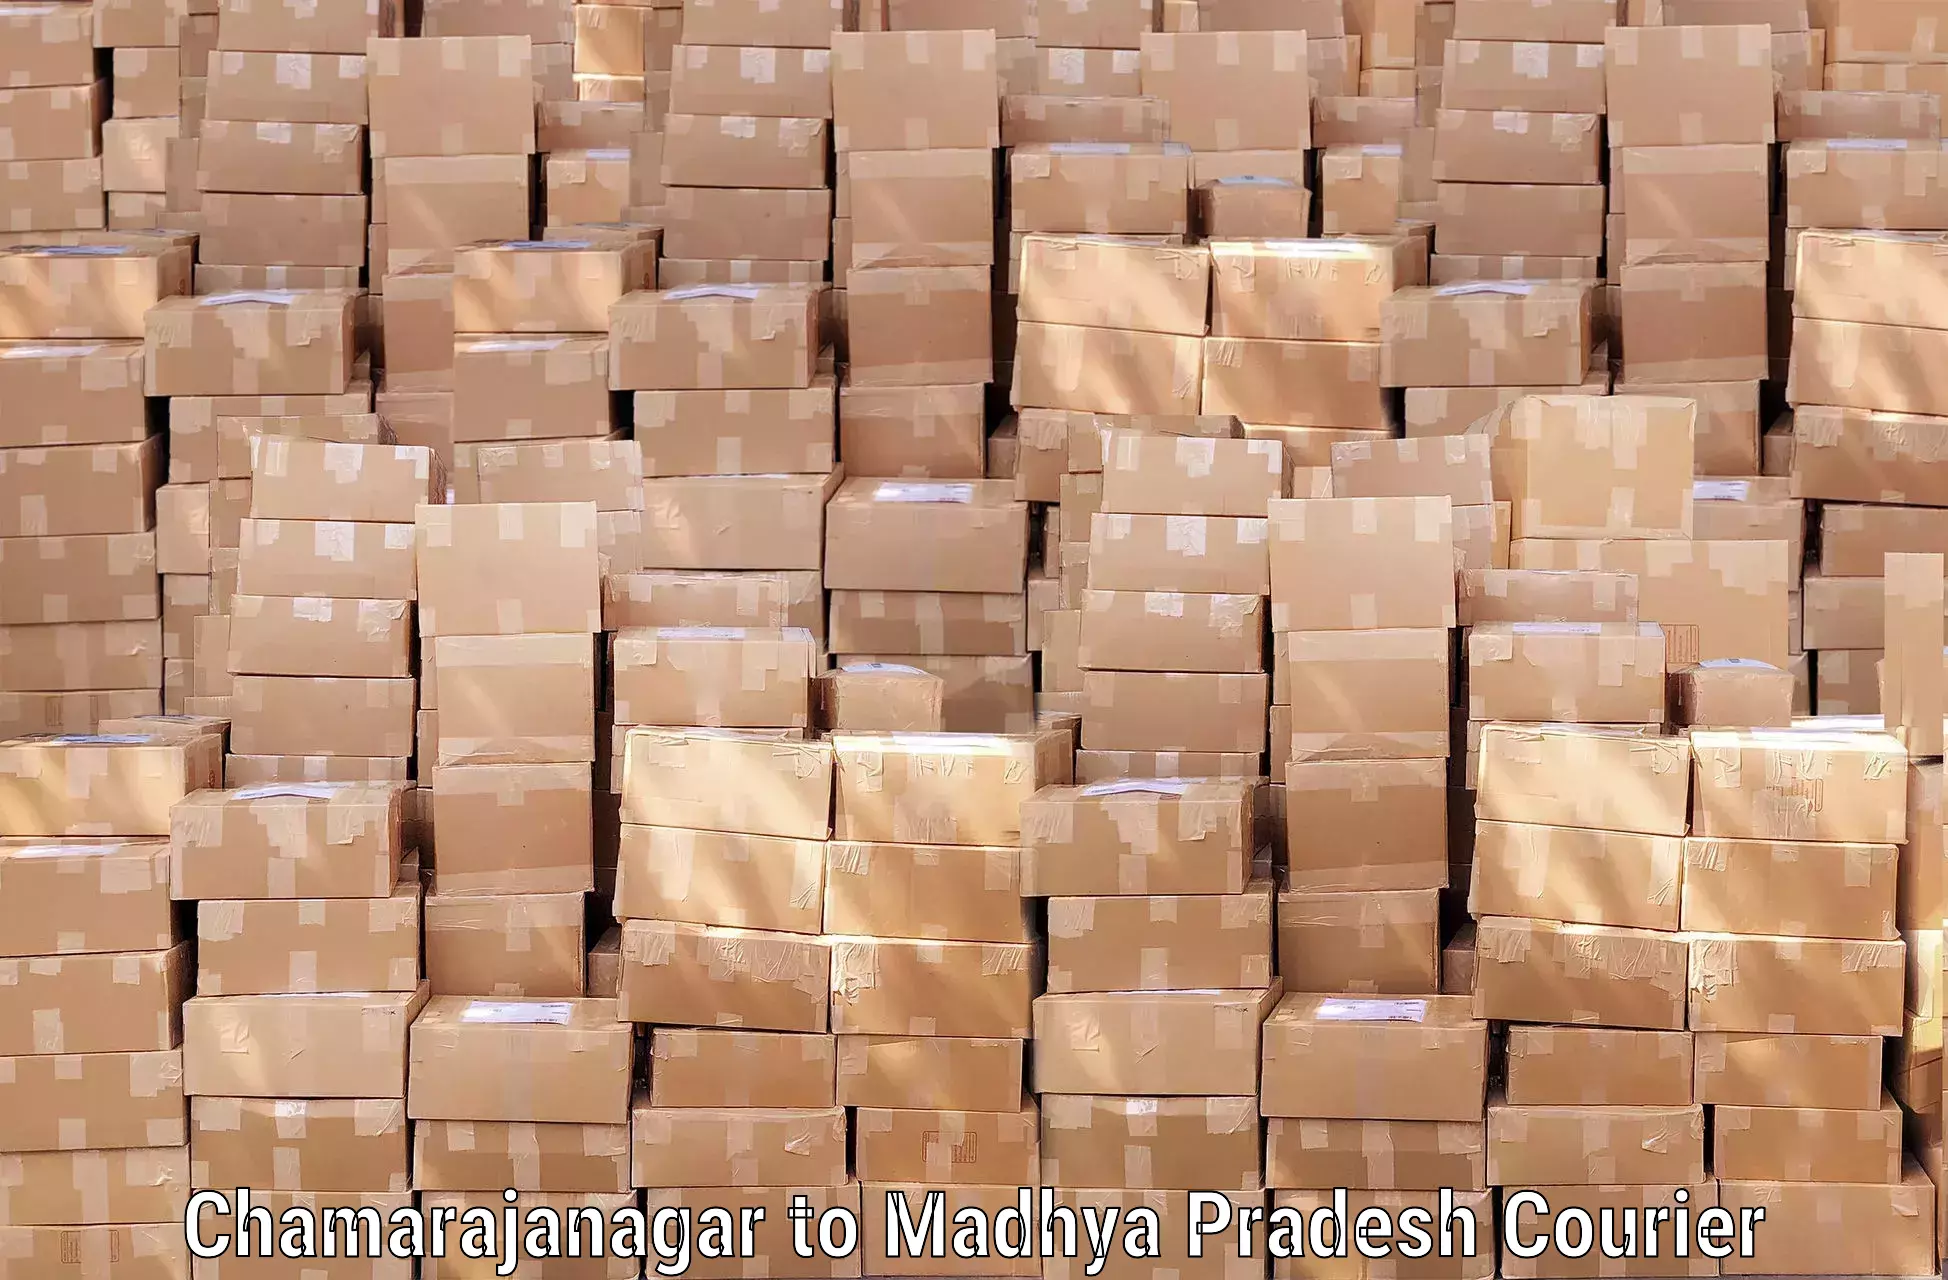 Luggage delivery app Chamarajanagar to Madhya Pradesh